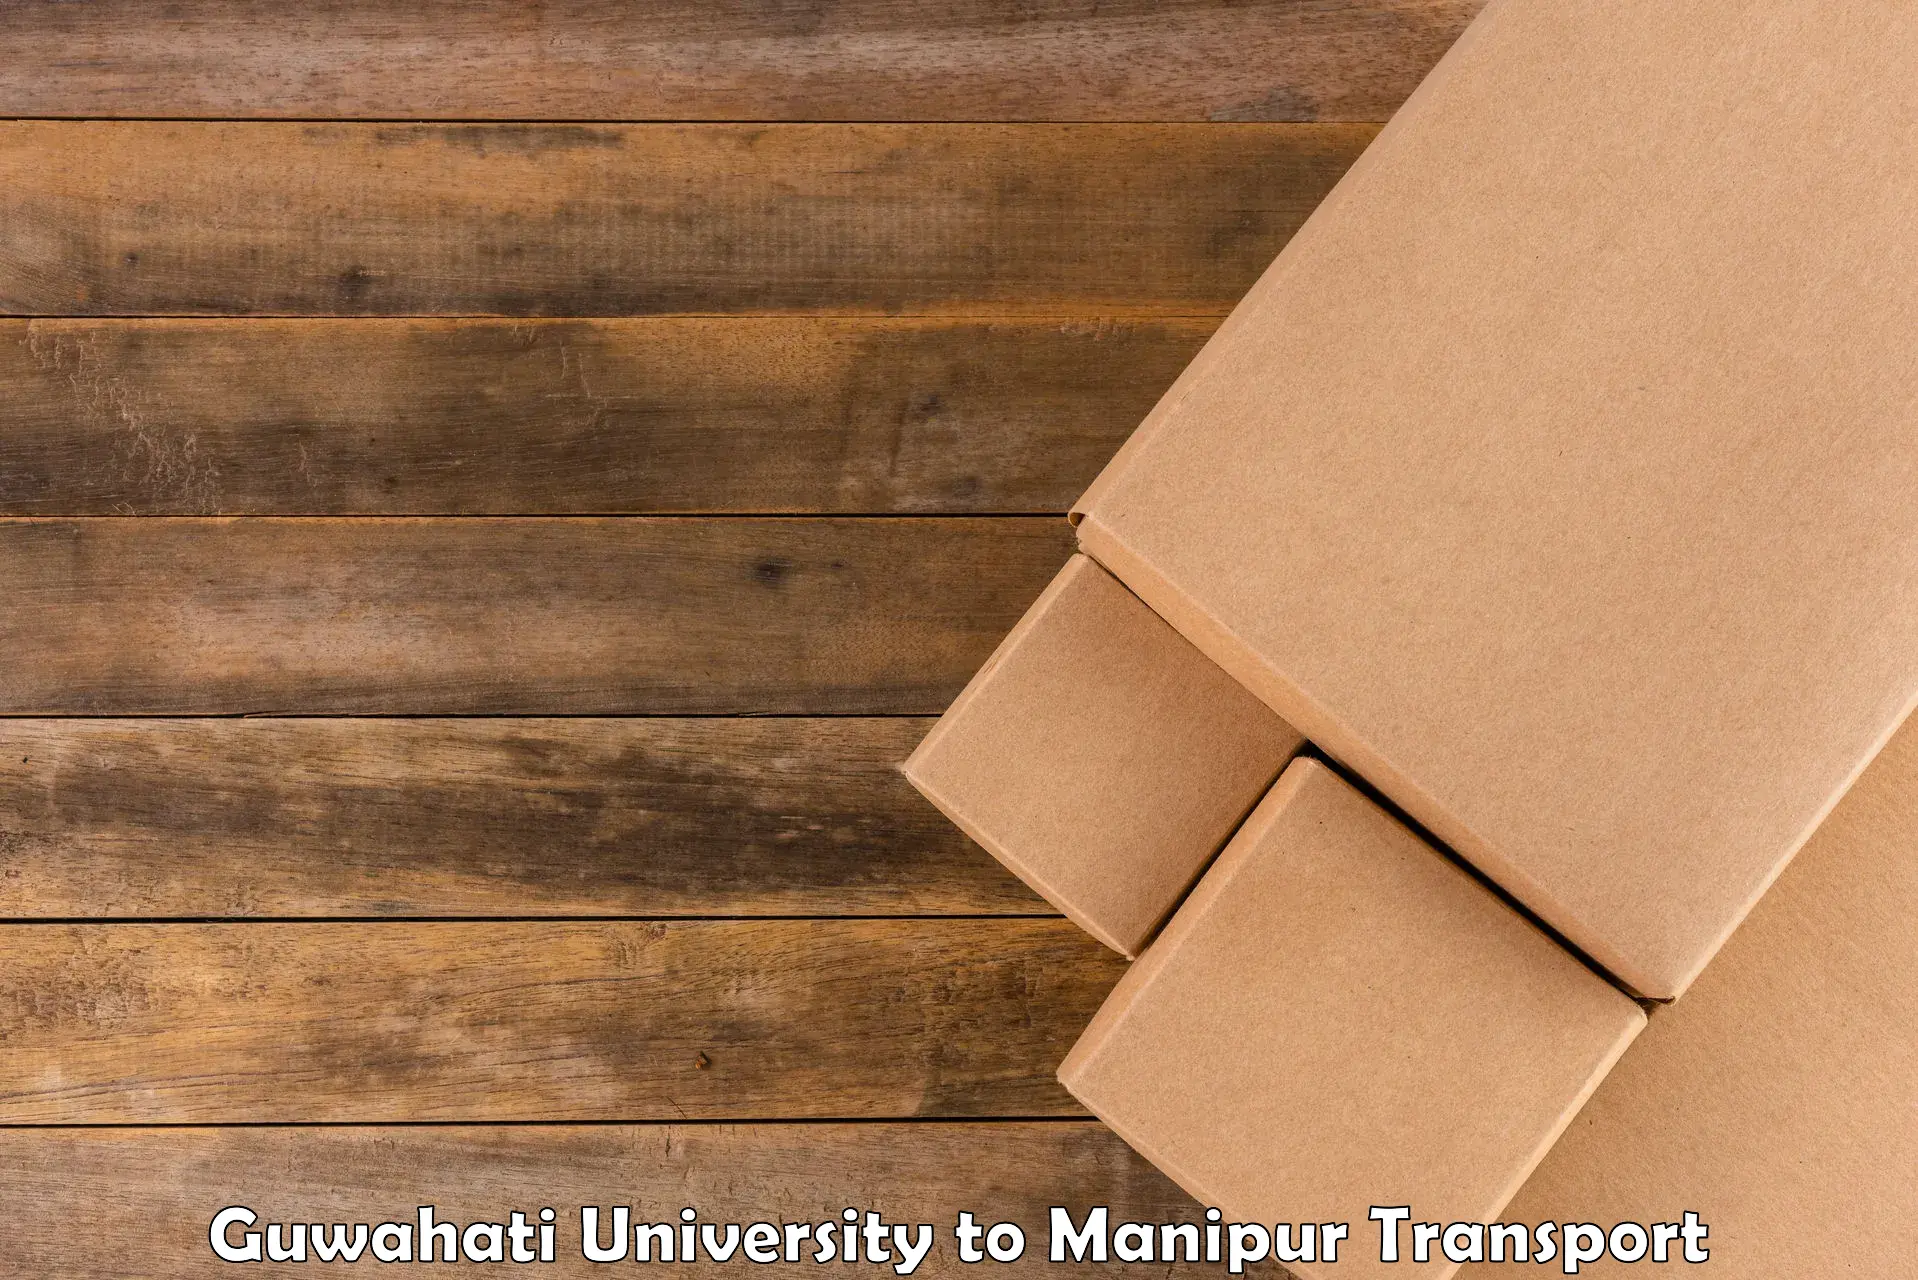 Truck transport companies in India Guwahati University to Kakching